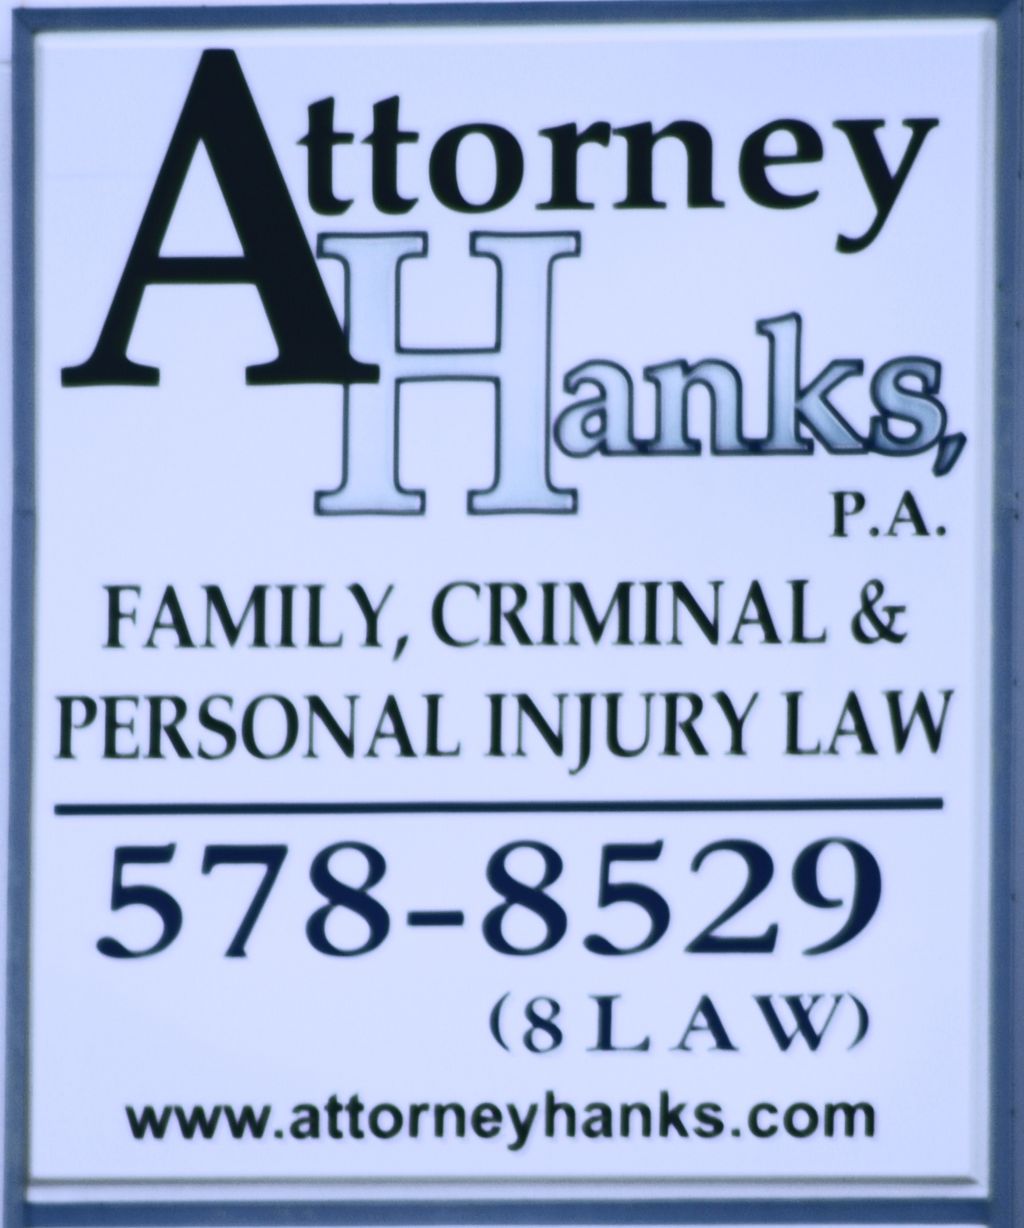 Attorney Hanks, P.A.